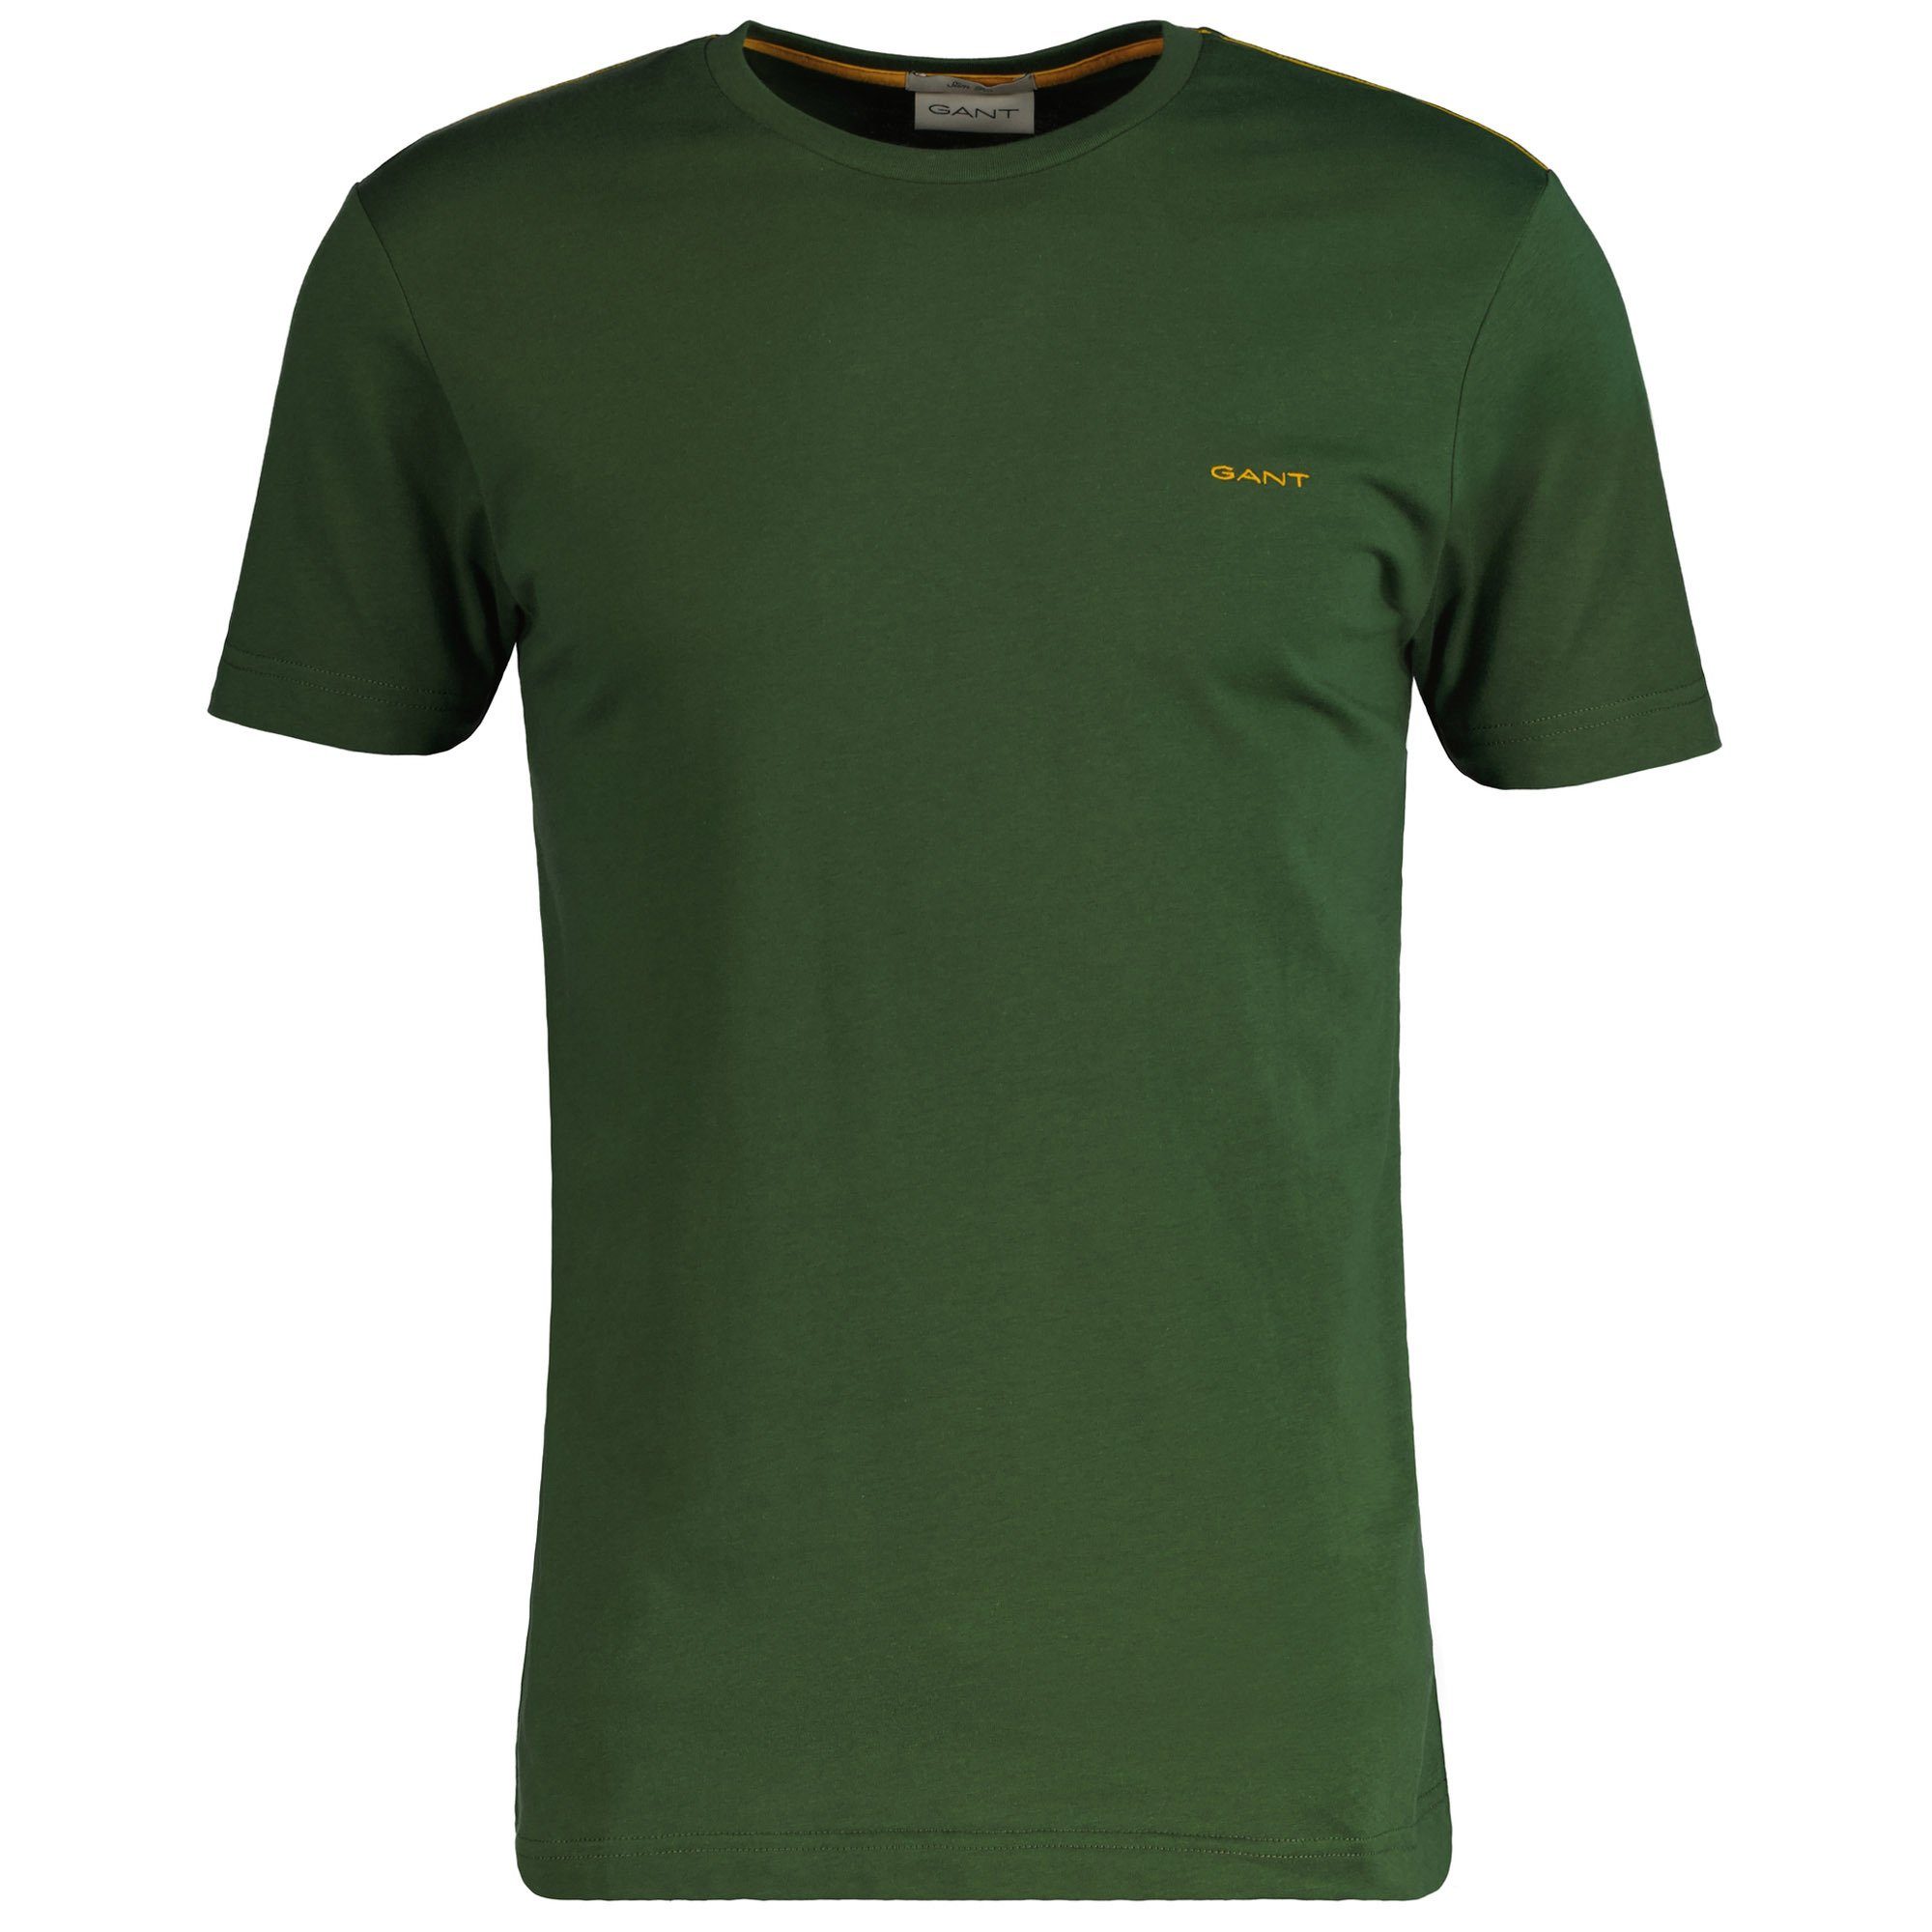 Gant T-Shirt Herren T-Shirt - CONTRAST LOGO, Rundhals, kurzarm